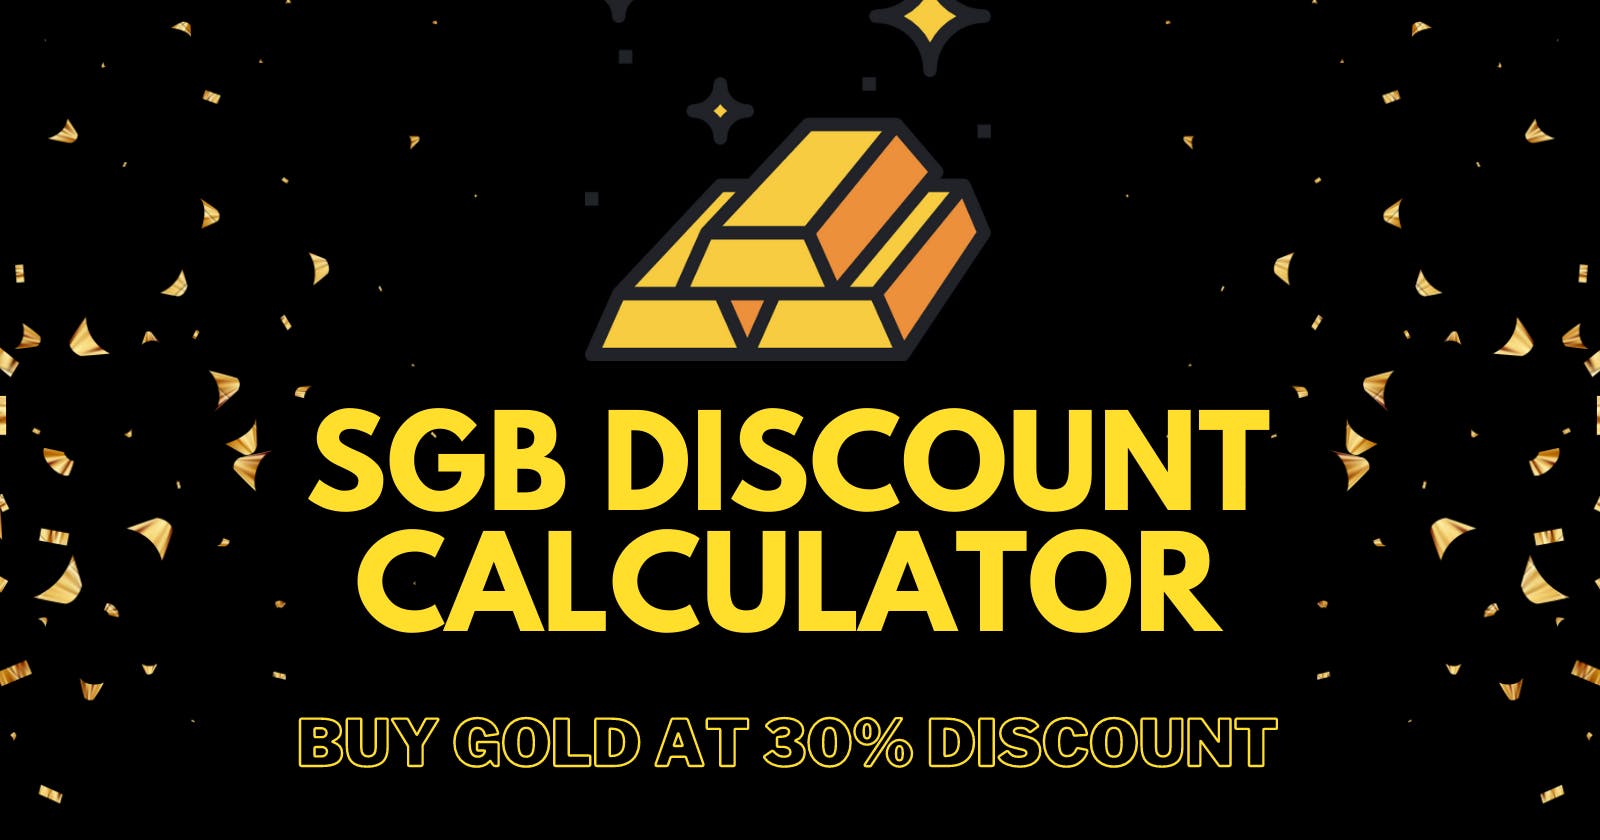 SGB Discount Calculator - Buy Gold at a 30% Discount!